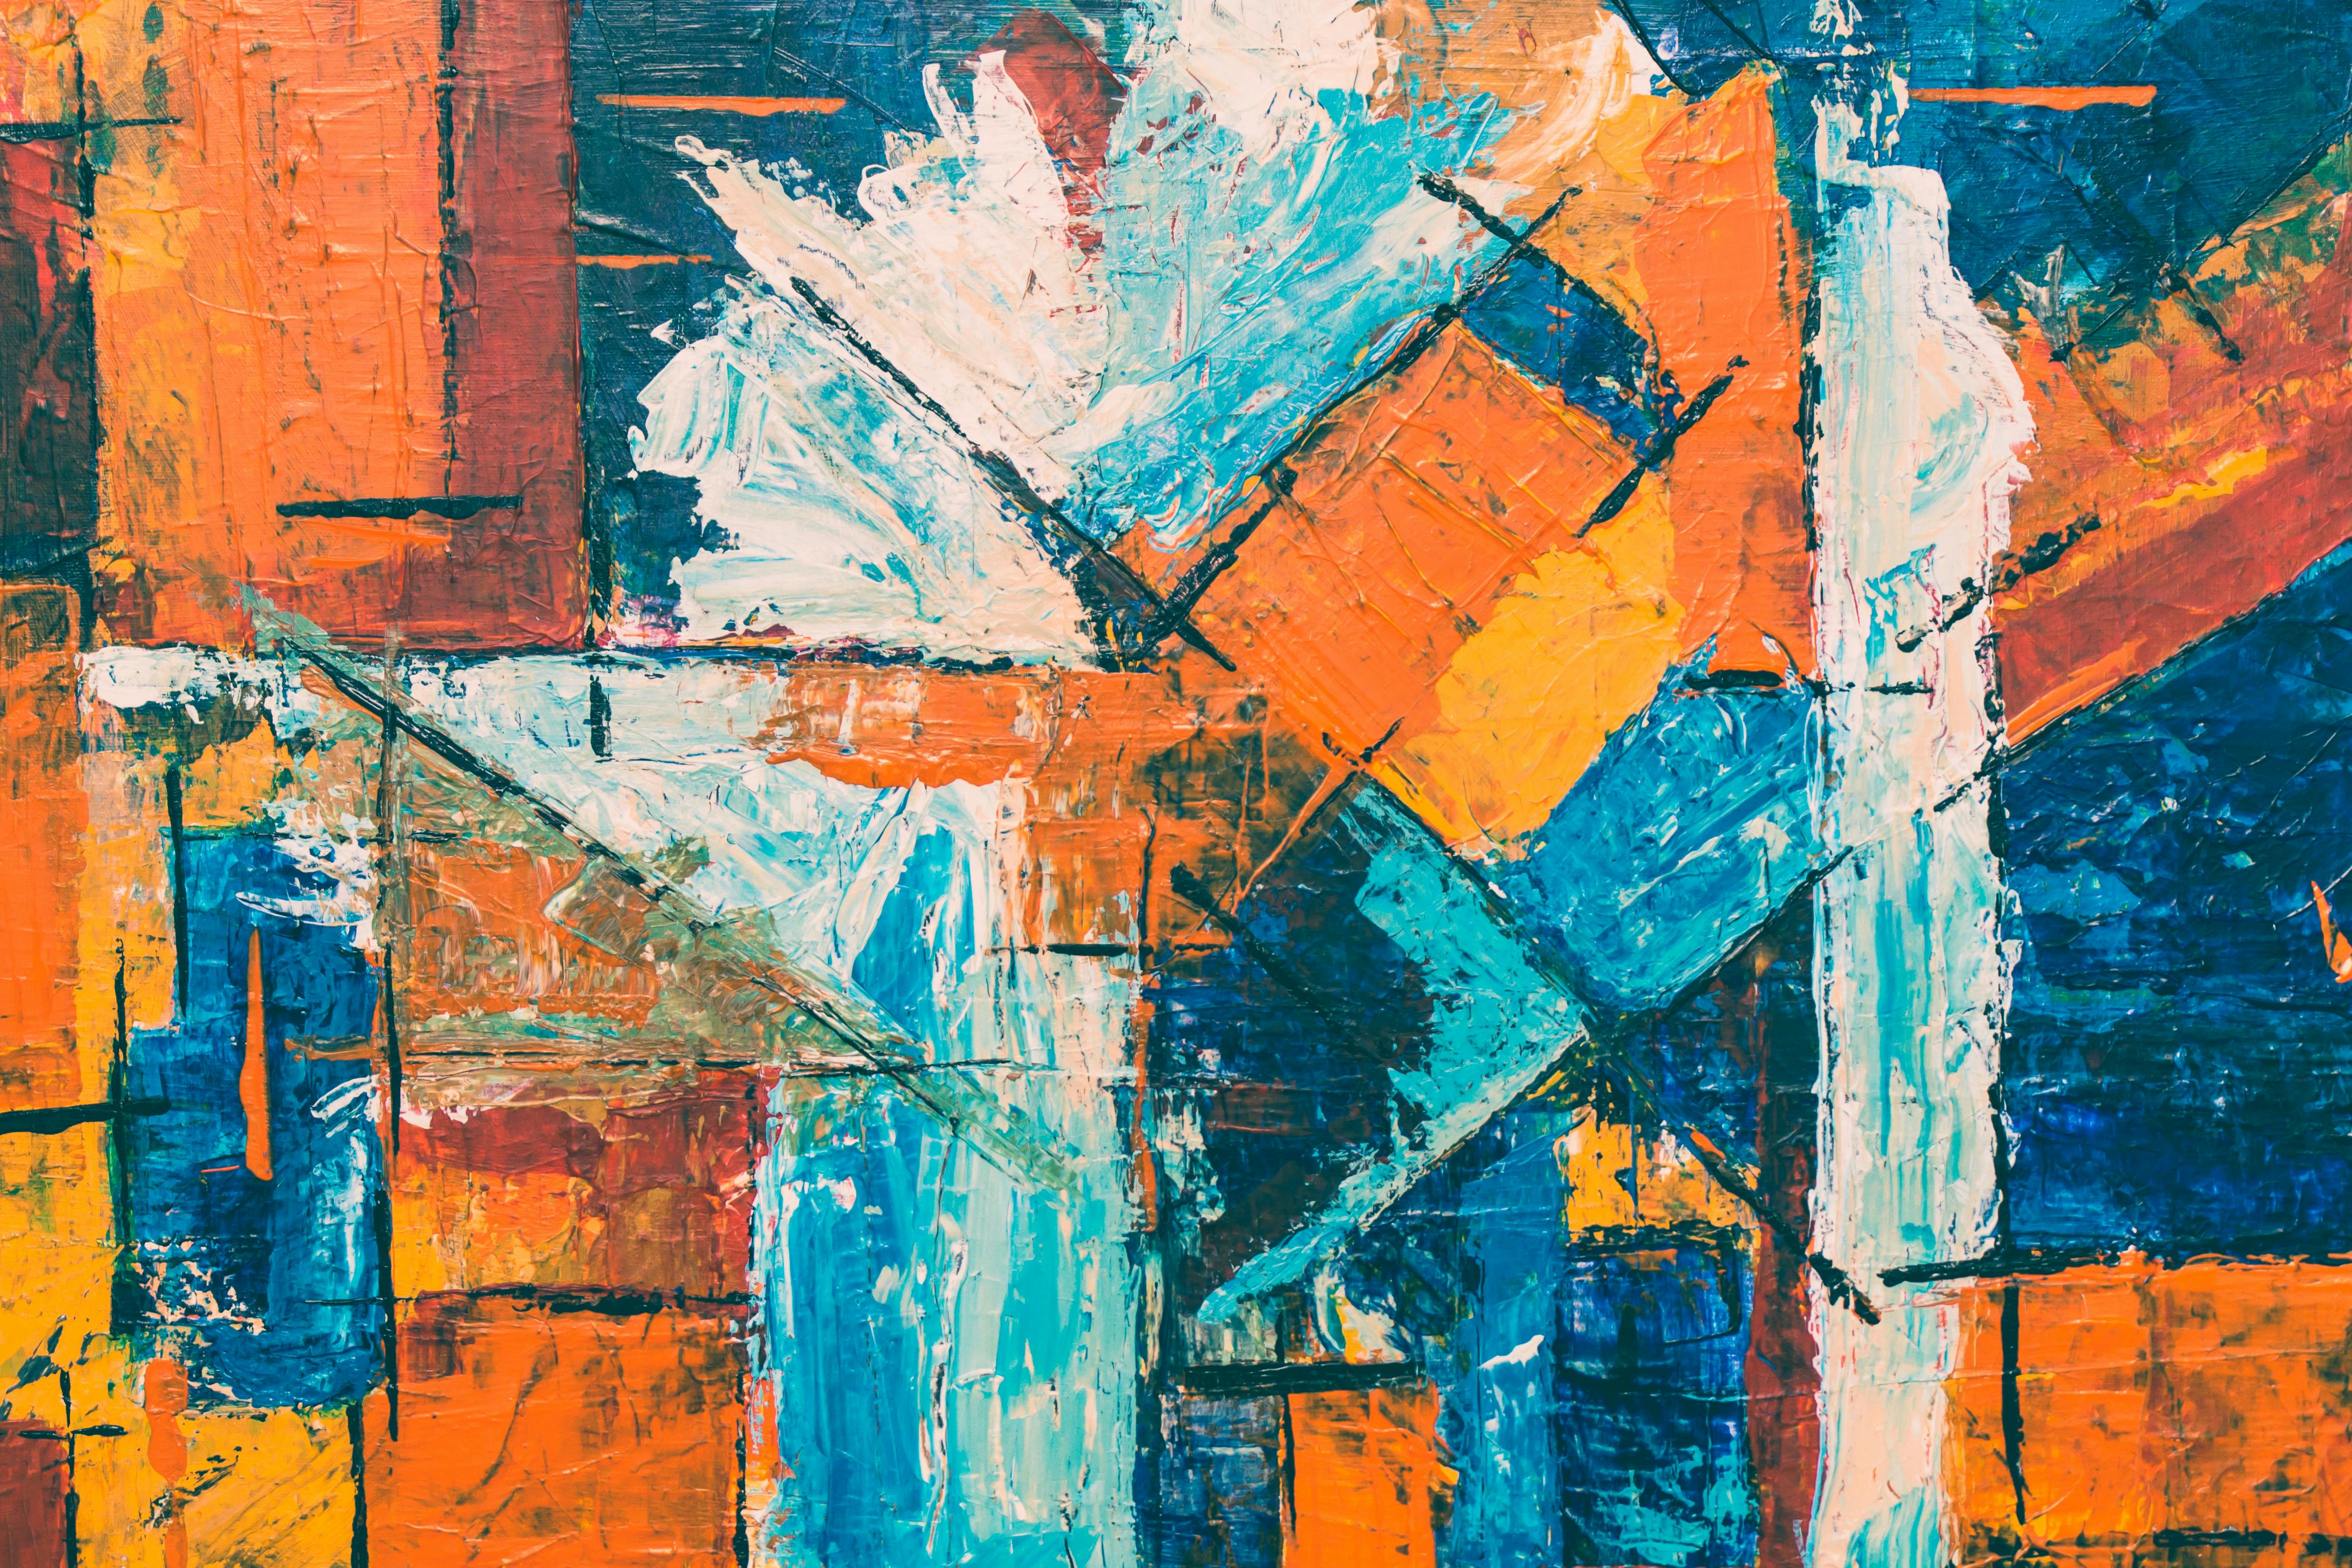 Share 84+ abstract painting wallpaper 4k latest - xkldase.edu.vn